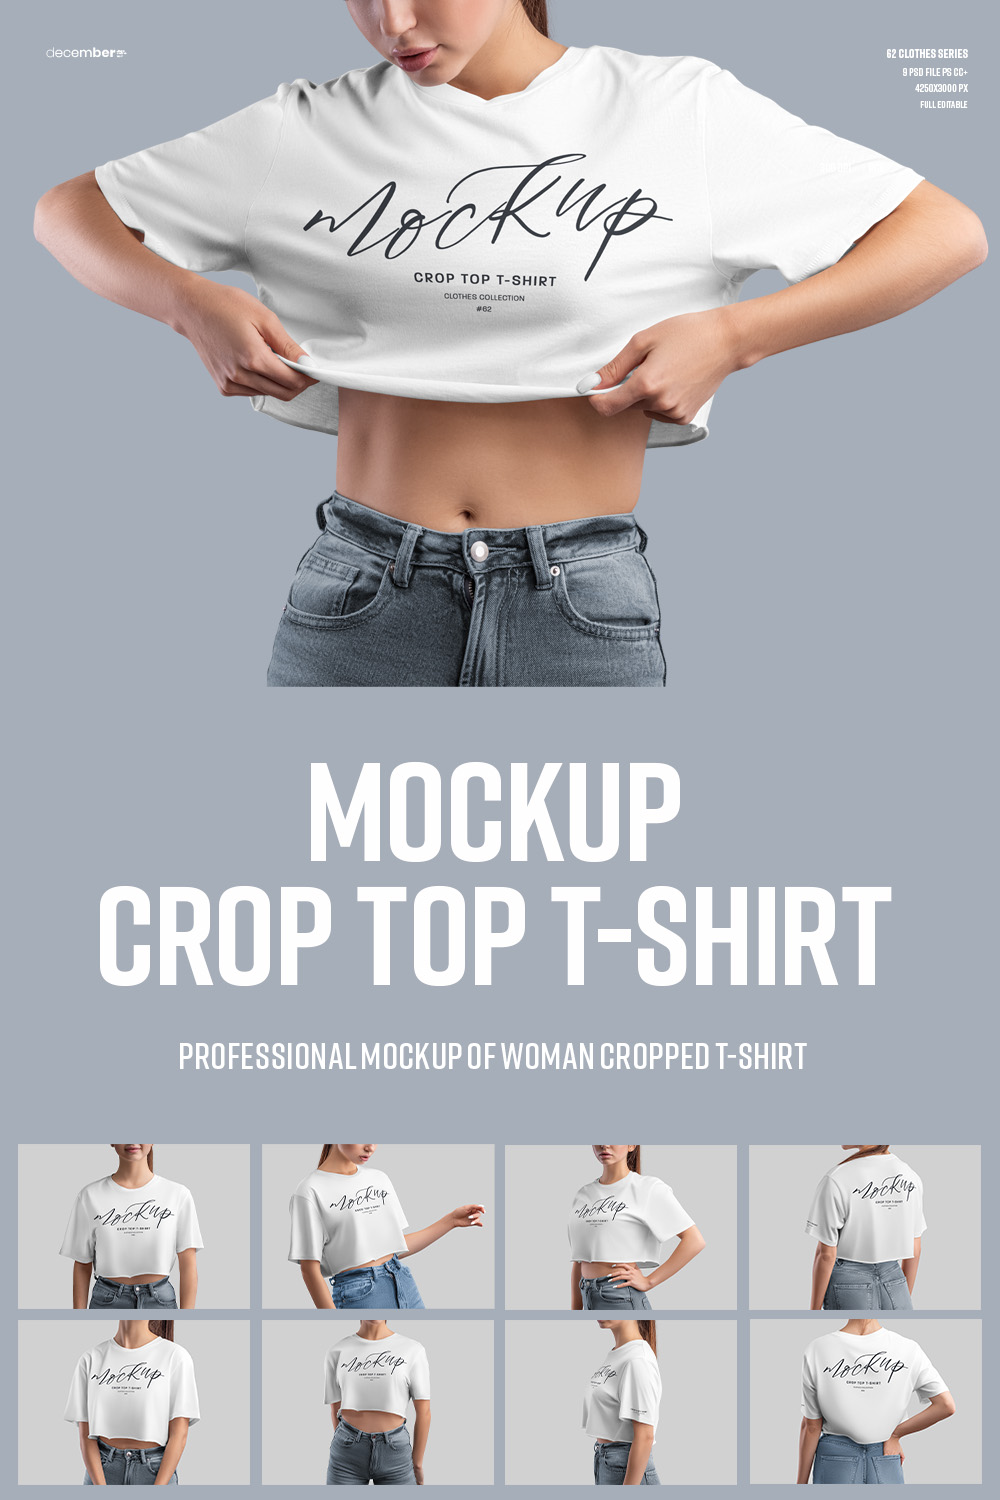 Mockups Crop Top Woman T-shirt Design pinterest image.